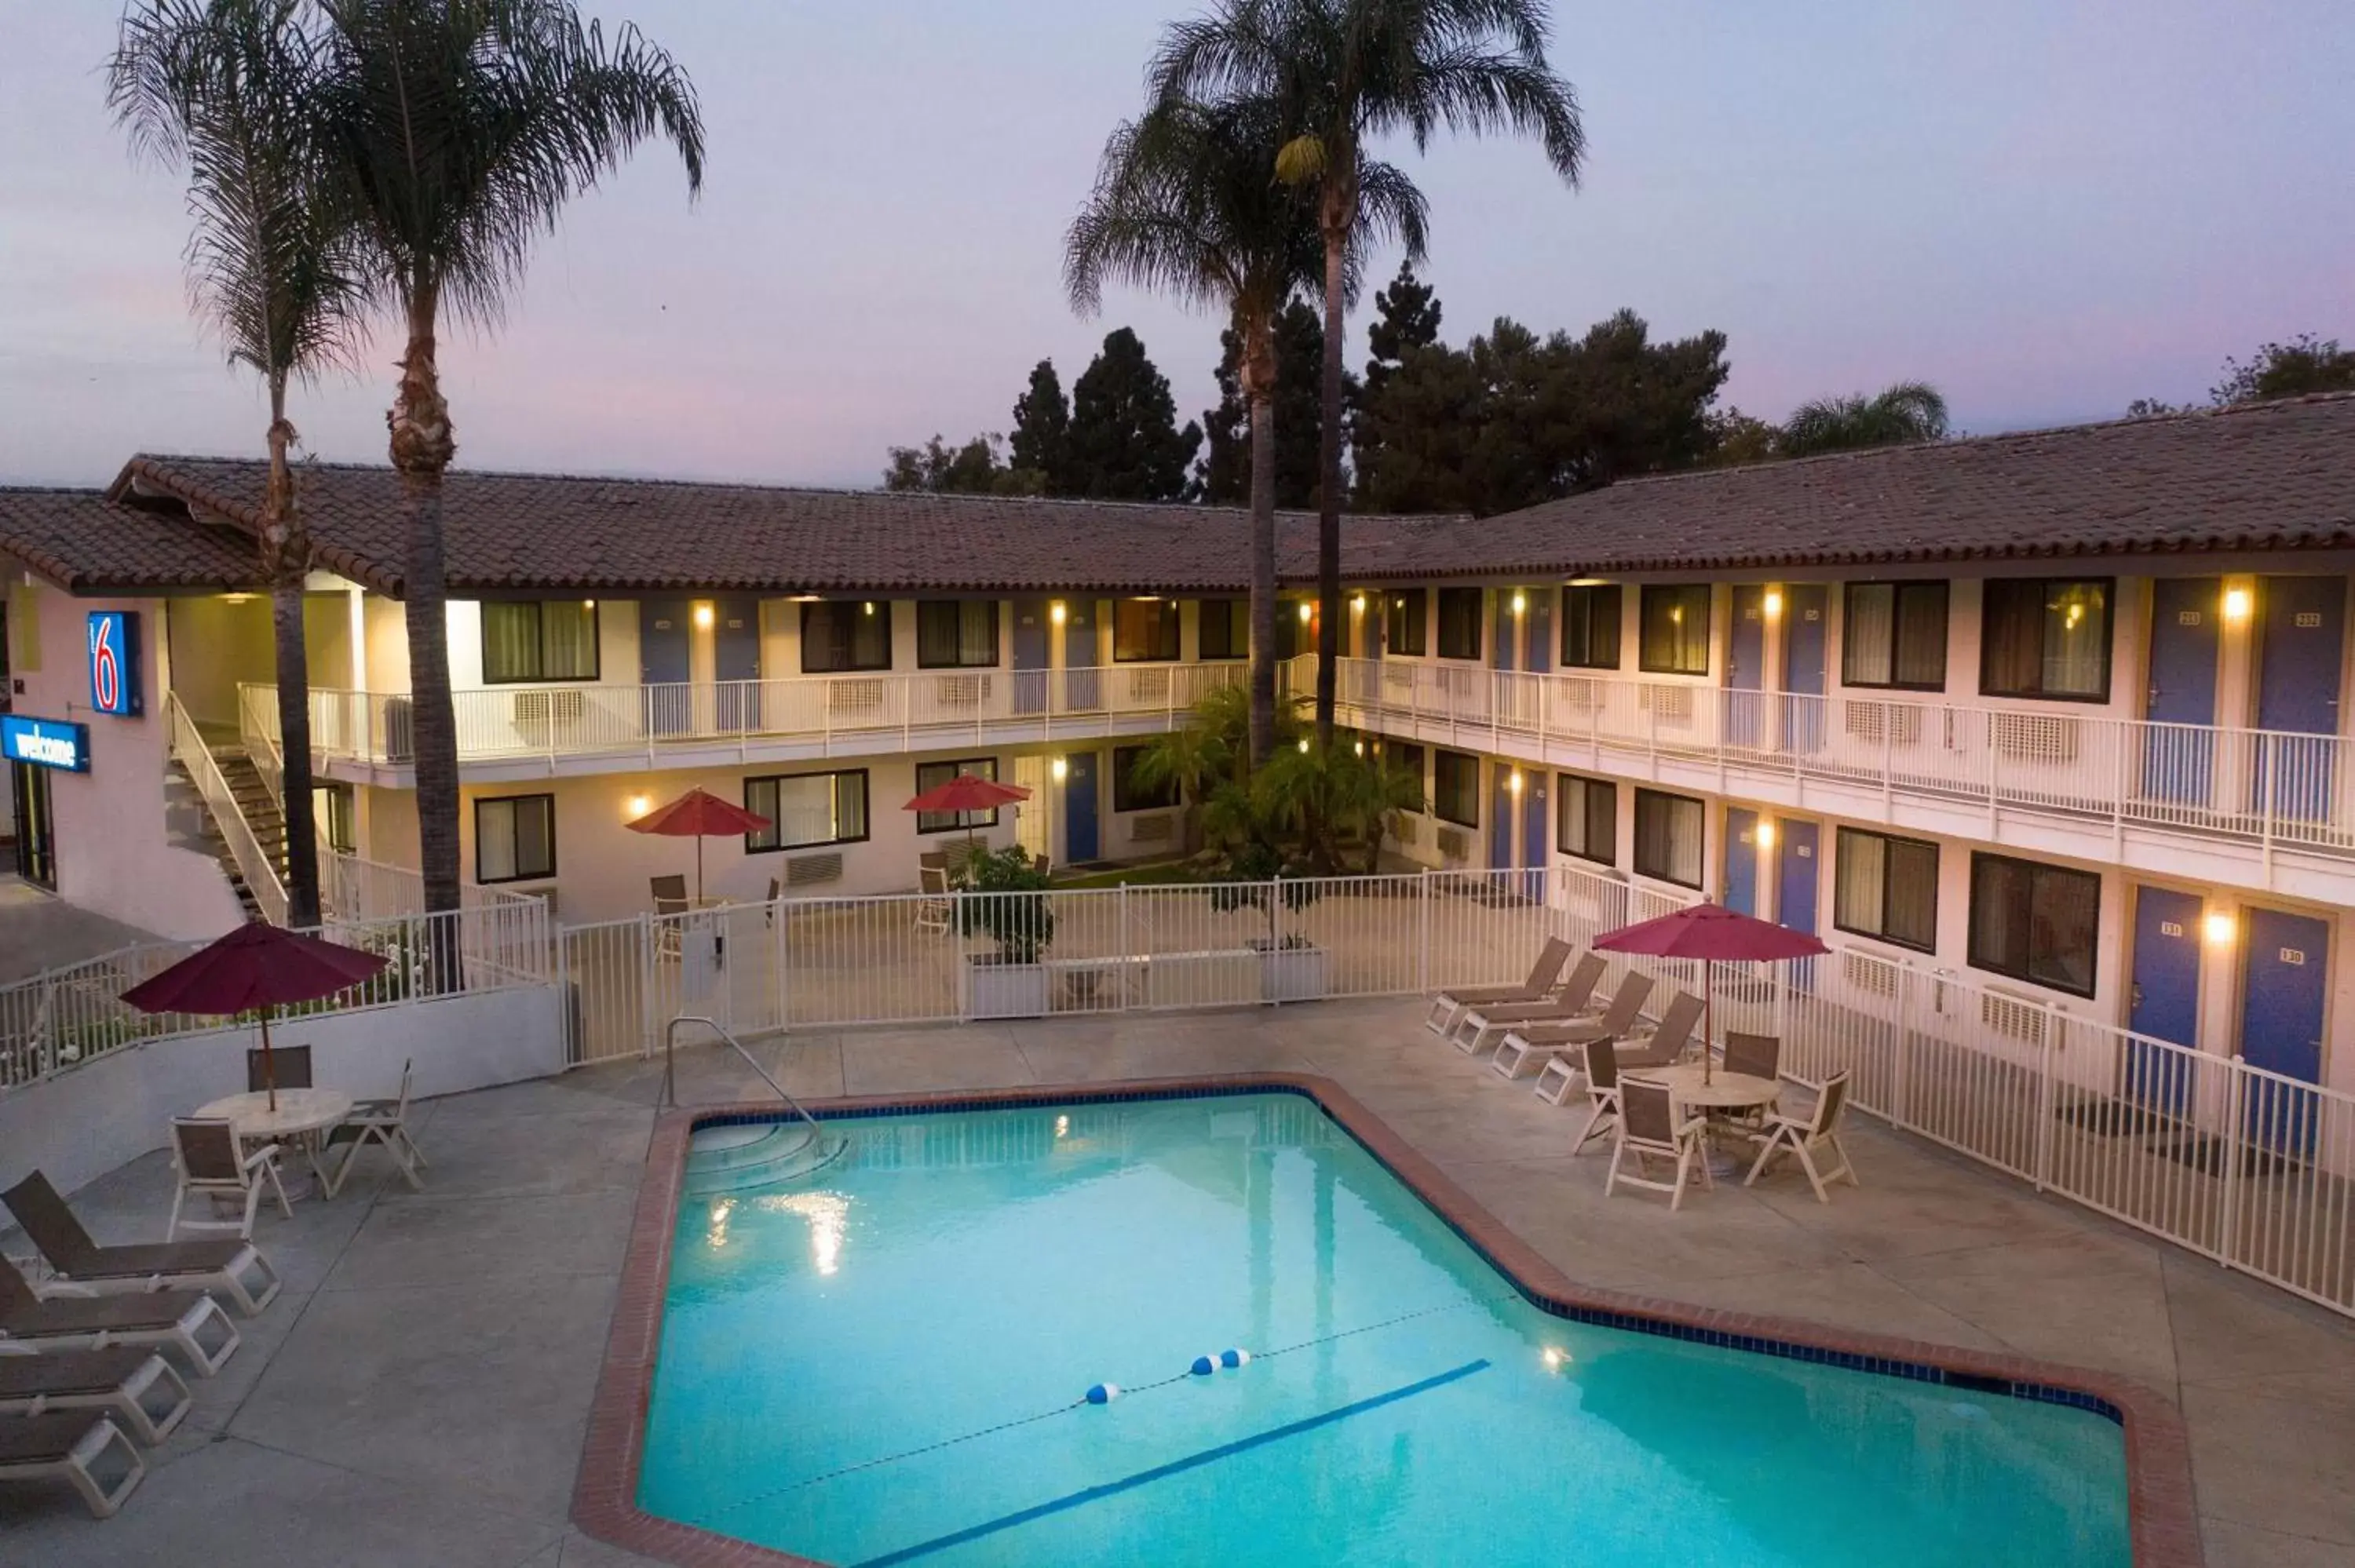 Activities, Pool View in Motel 6-Camarillo, CA